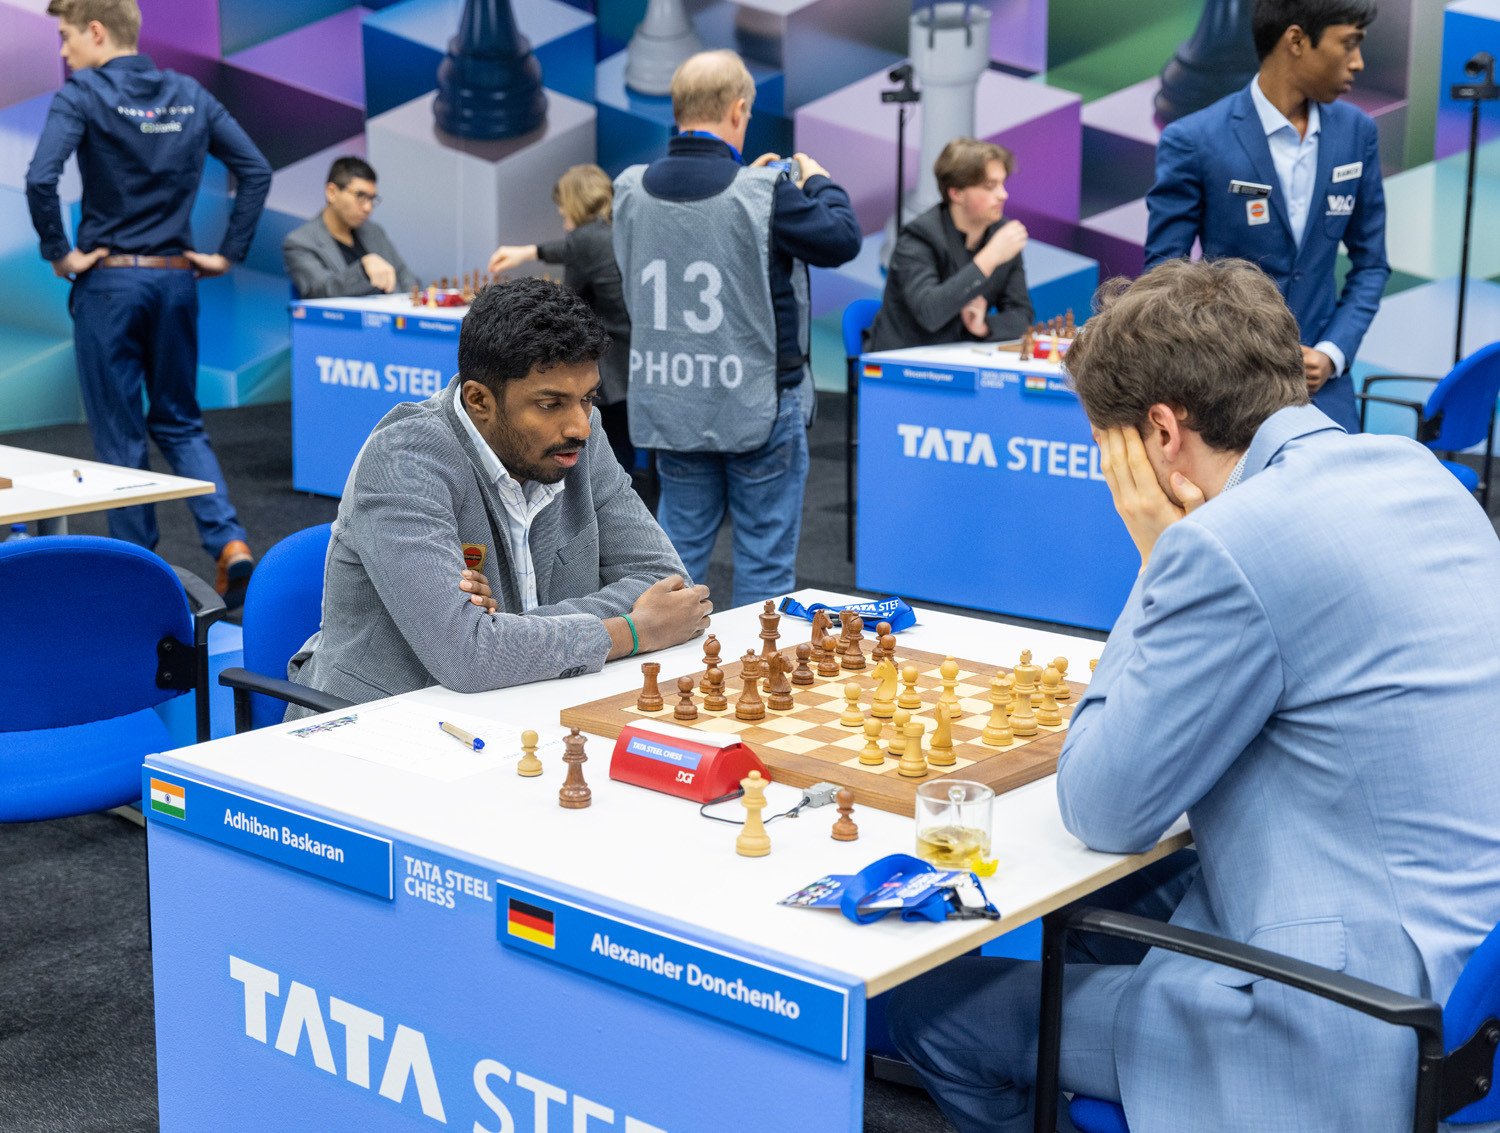 2023 Photo Gallery  Tata steel Chess Tournament